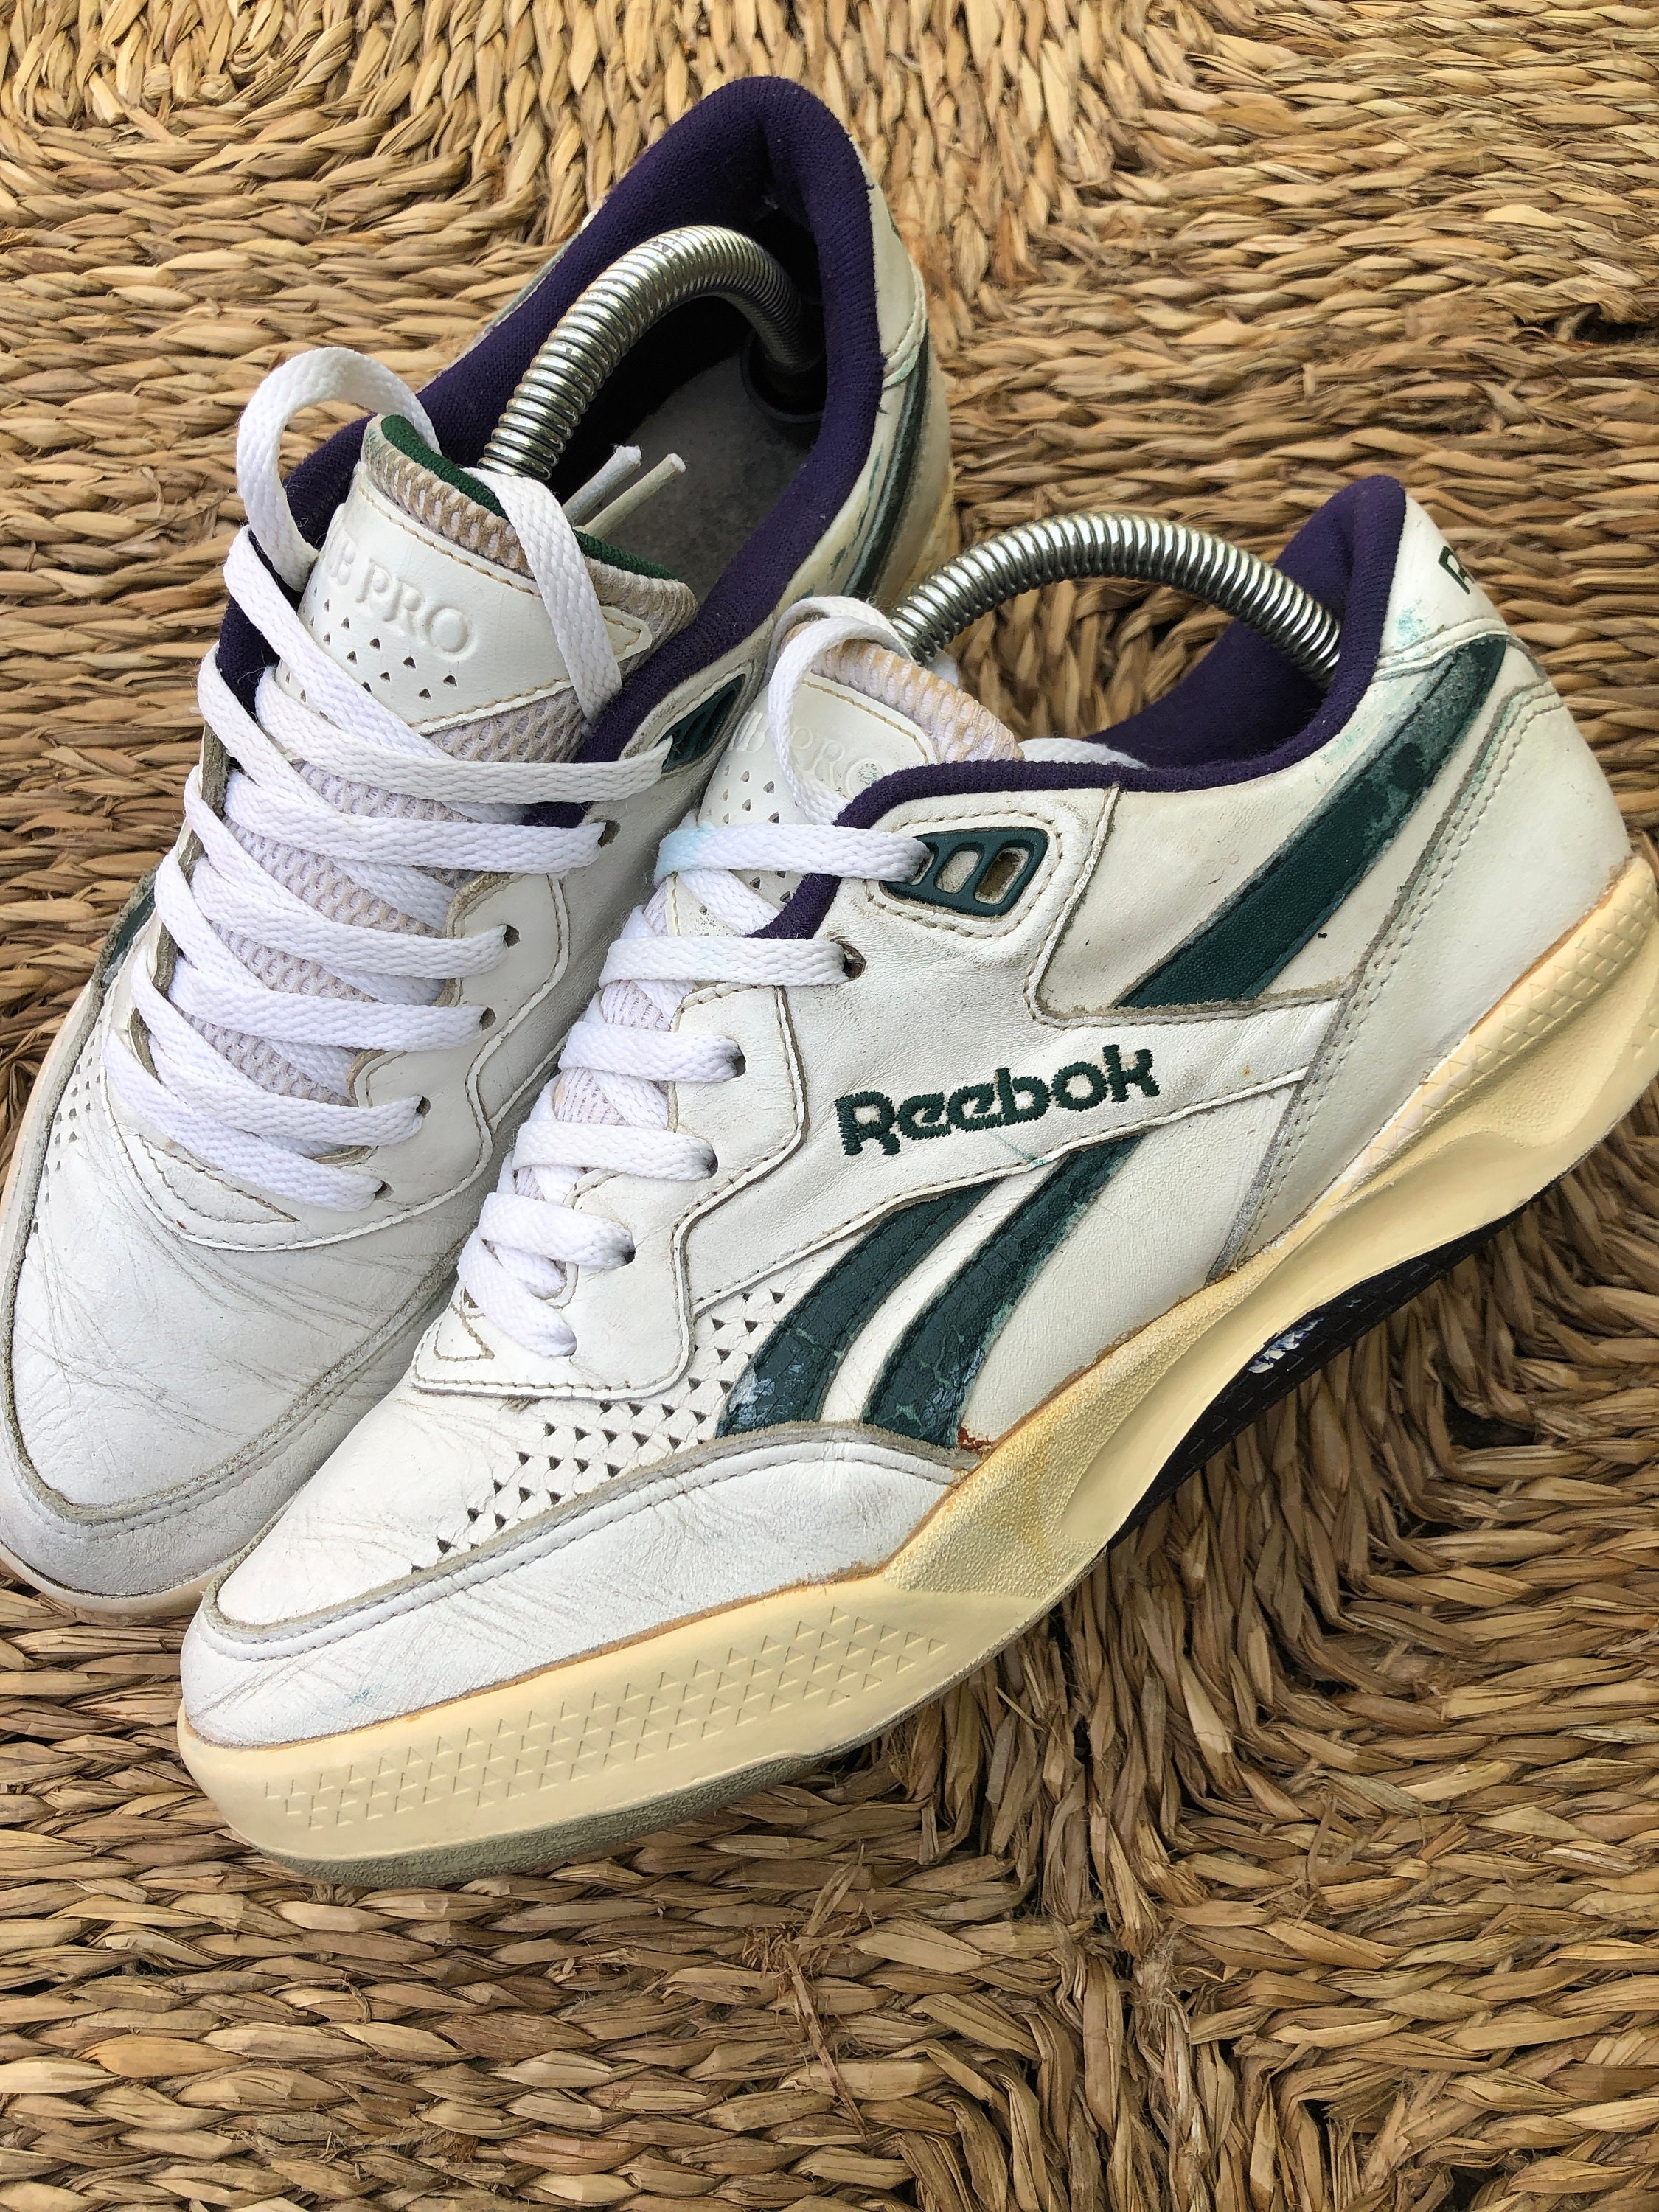 Rare Reebok Shoes - Etsy